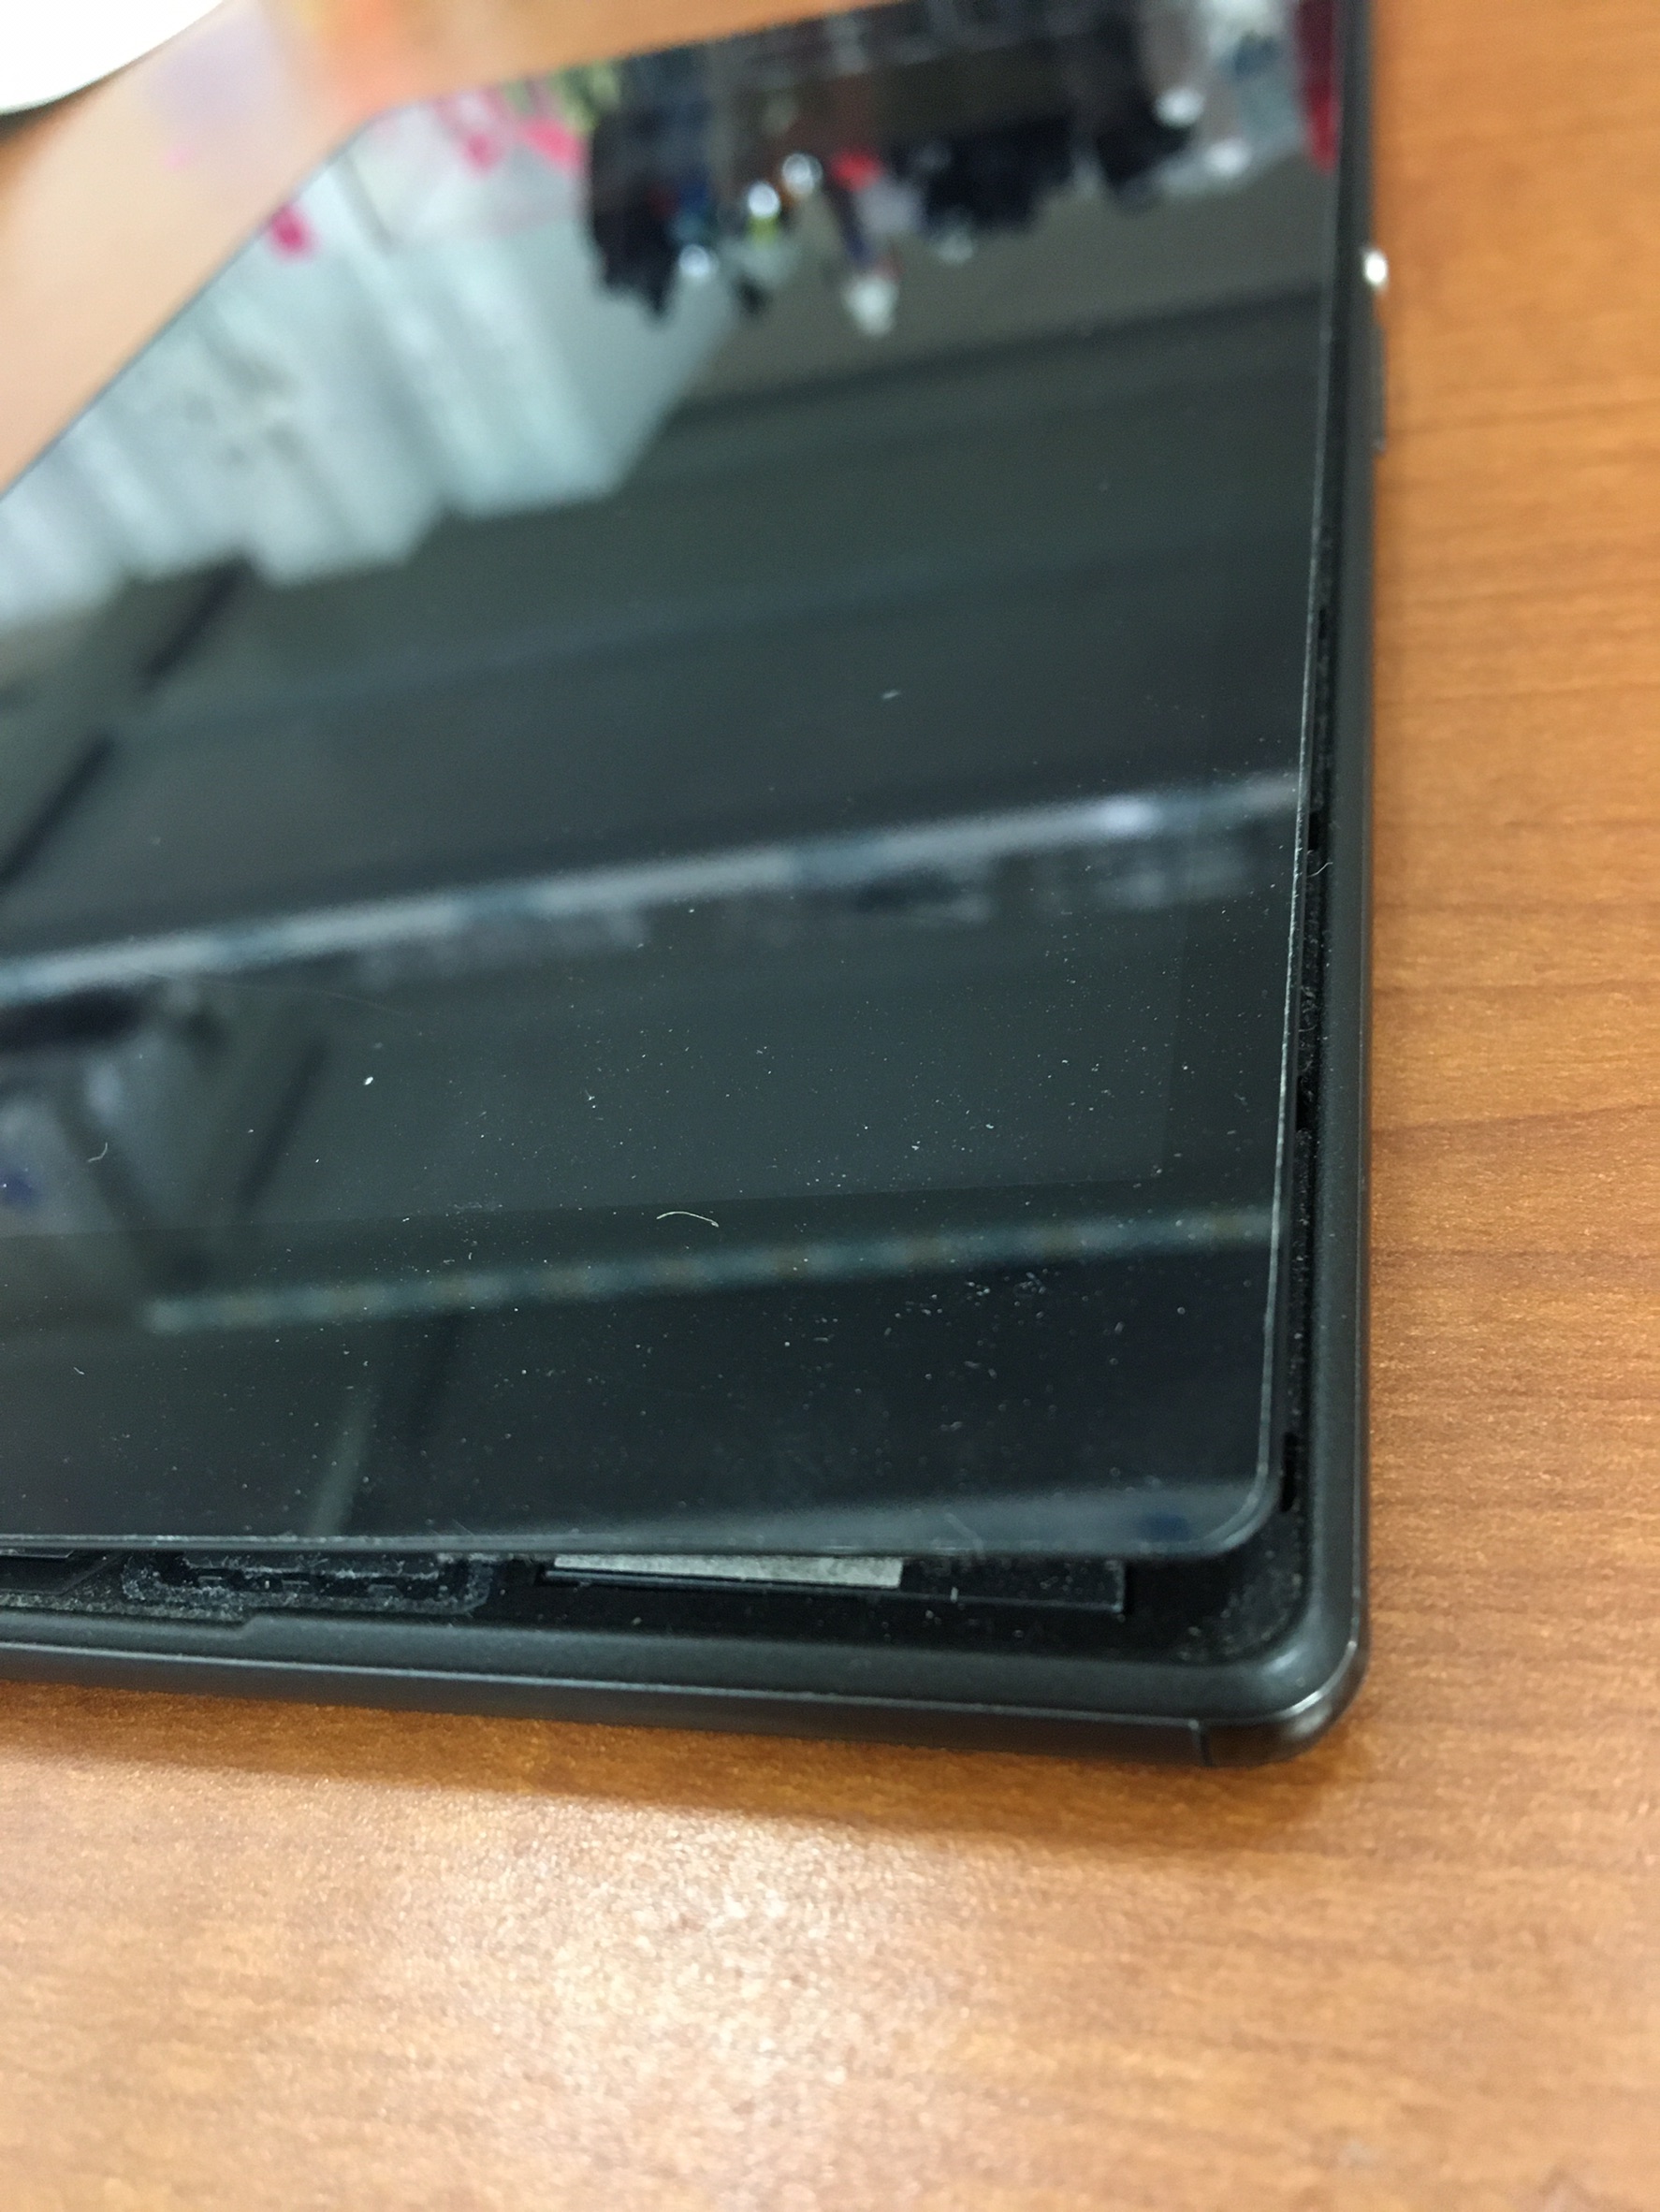 Xperia Z3 Tablet Compactのバッテリー膨張で画面が浮き上がり内部が見えるようになった スマホスピタル熊本下通店がバッテリー交換修理をさせていただきました Xperia Galaxy Zenfone Huawei Nexus修理のアンドロイドホスピタル